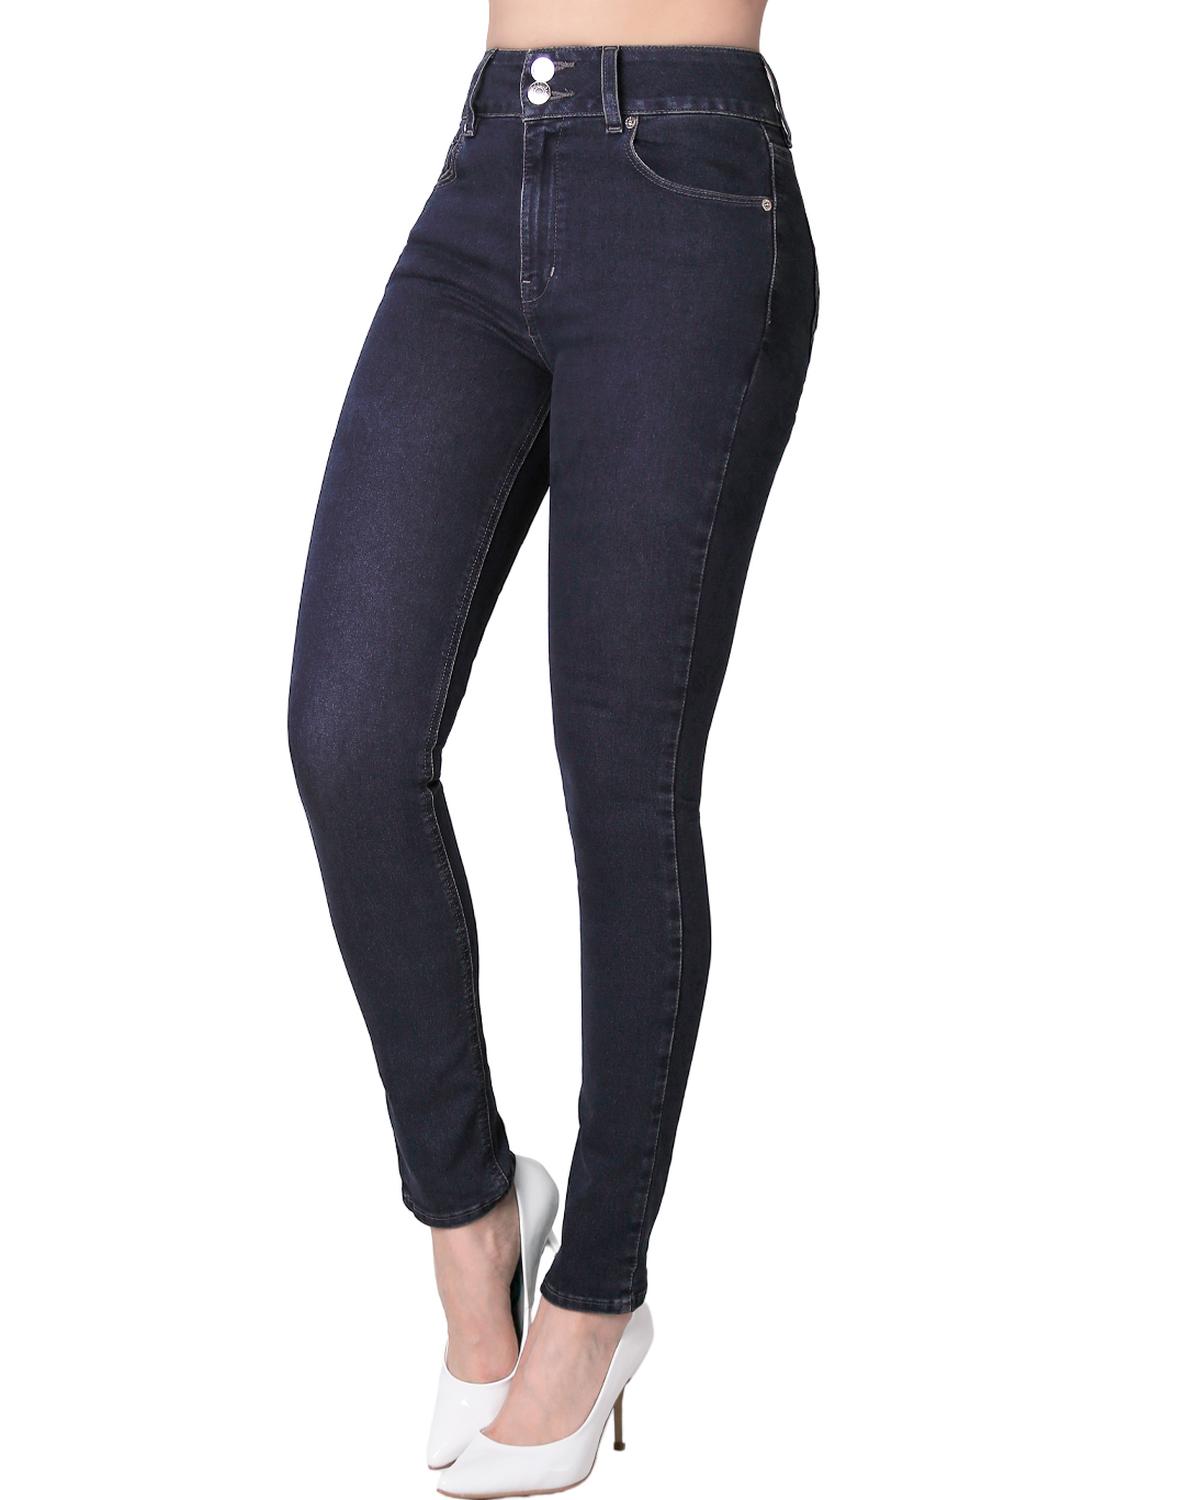 Jeans Básico Mujer Oggi Satin 59102091 Mezclilla Stretch